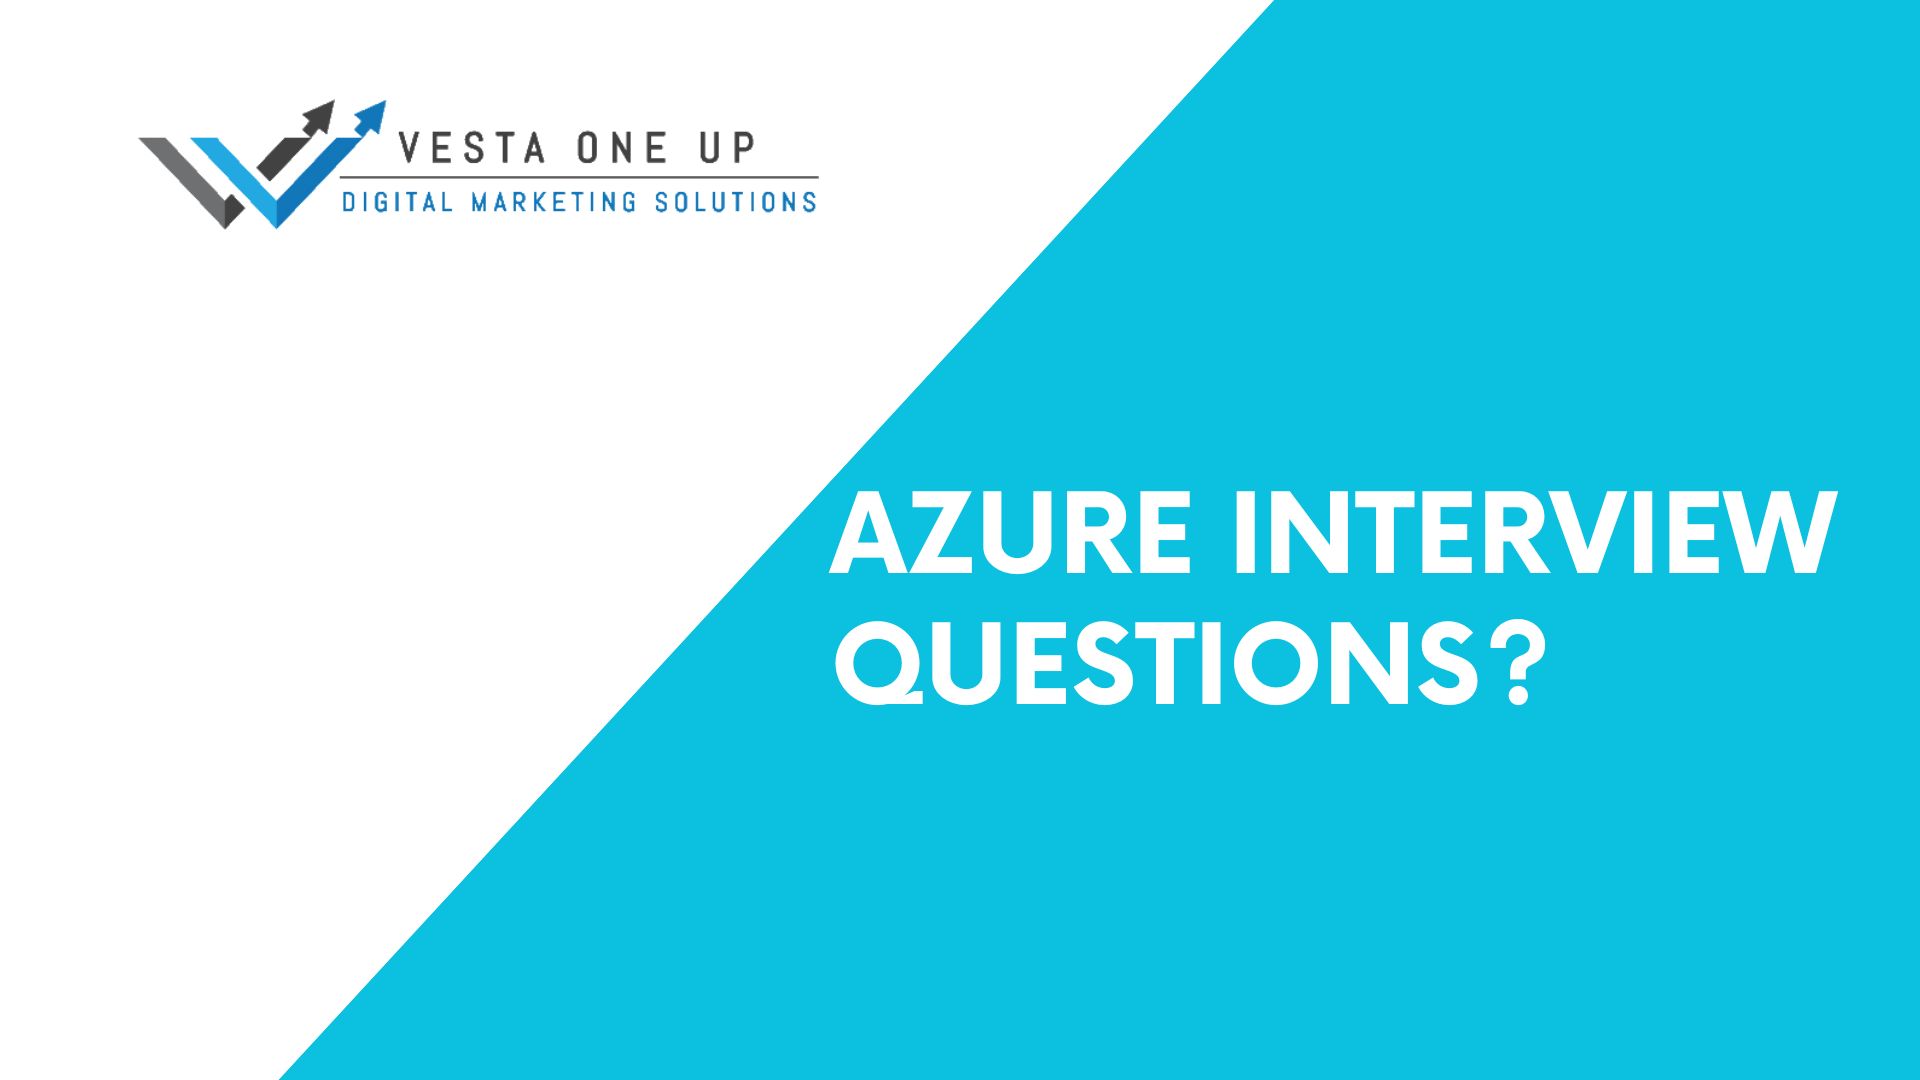 Azure interview questions?